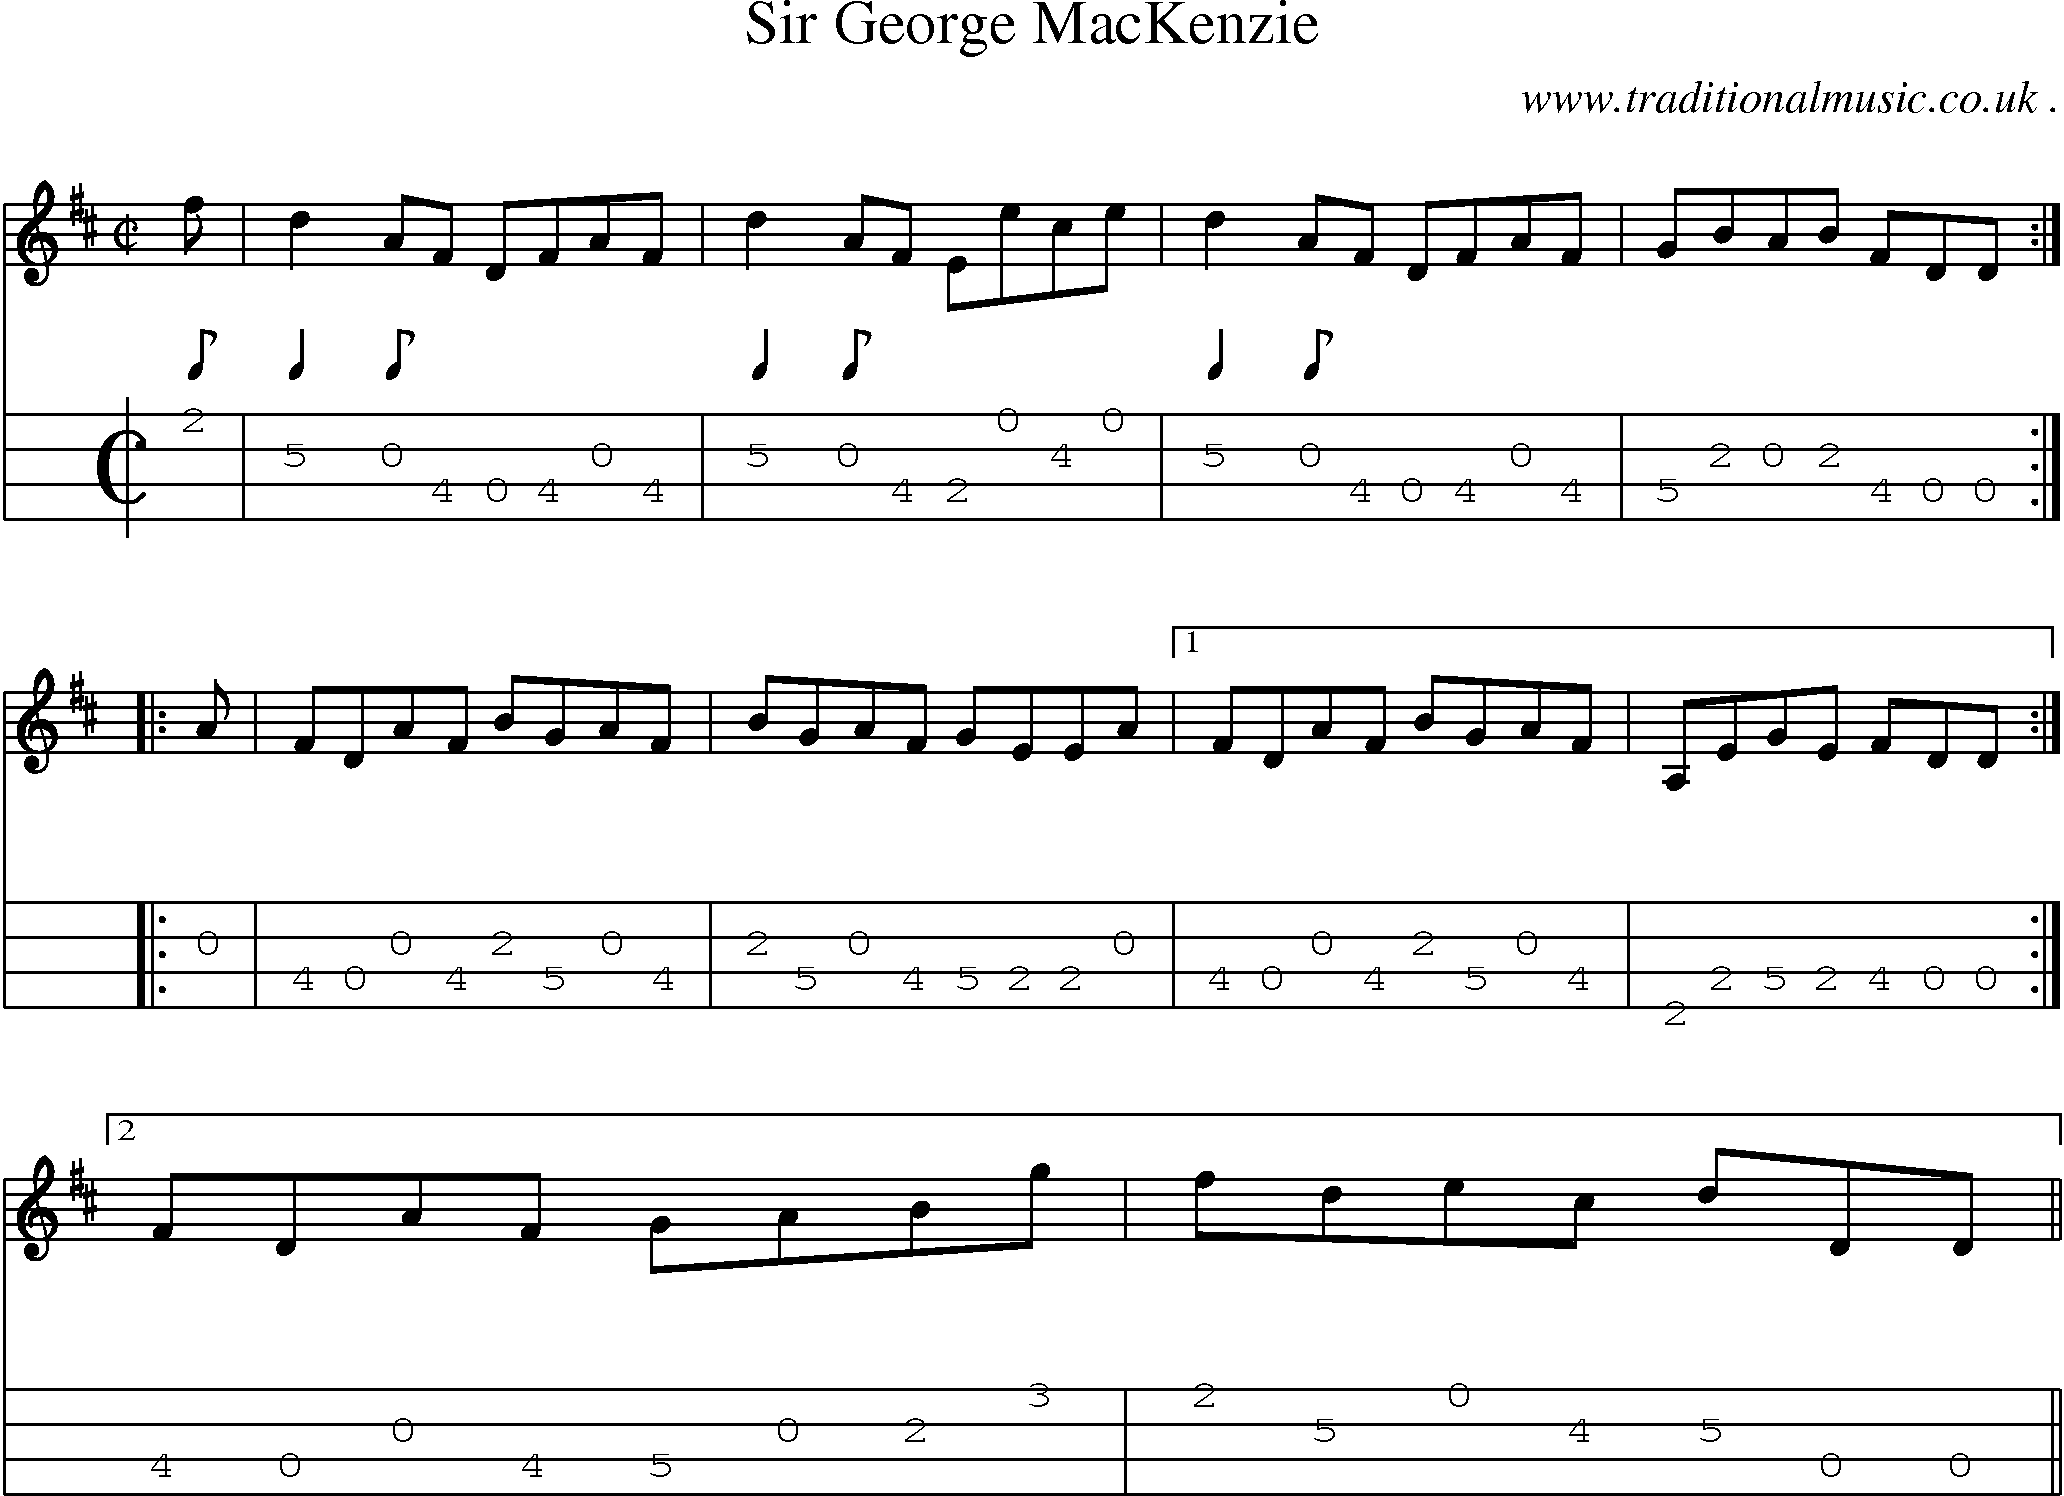 Sheet-music  score, Chords and Mandolin Tabs for Sir George Mackenzie